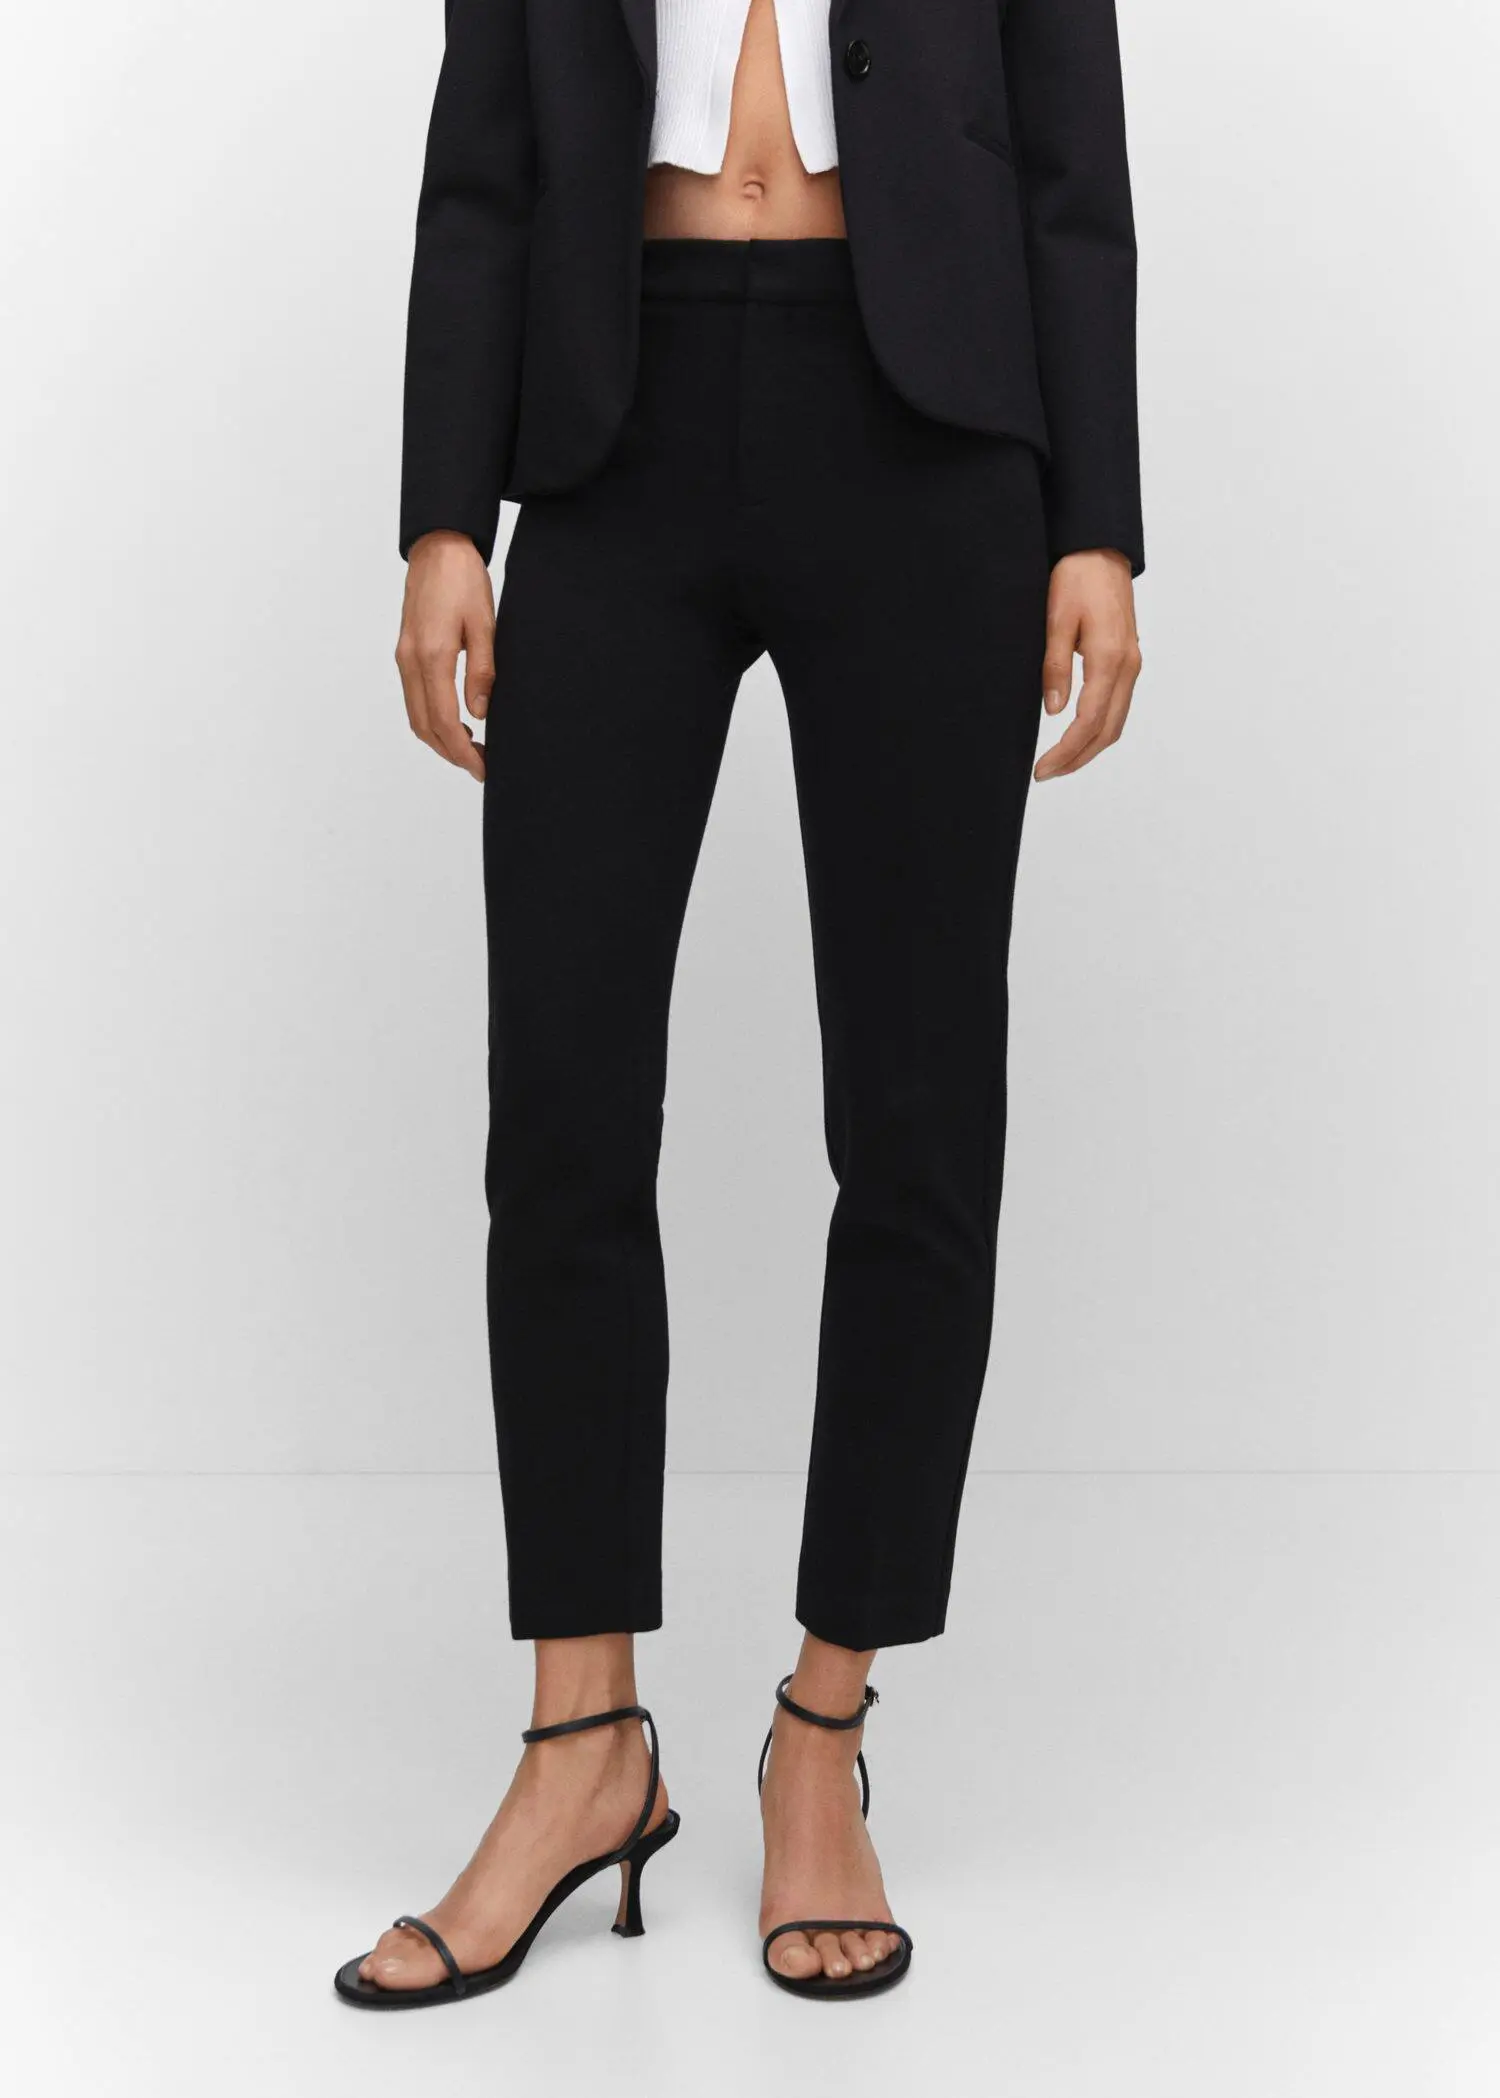 Mango Rome-knit straight pants. a woman wearing black pants and a black jacket. 